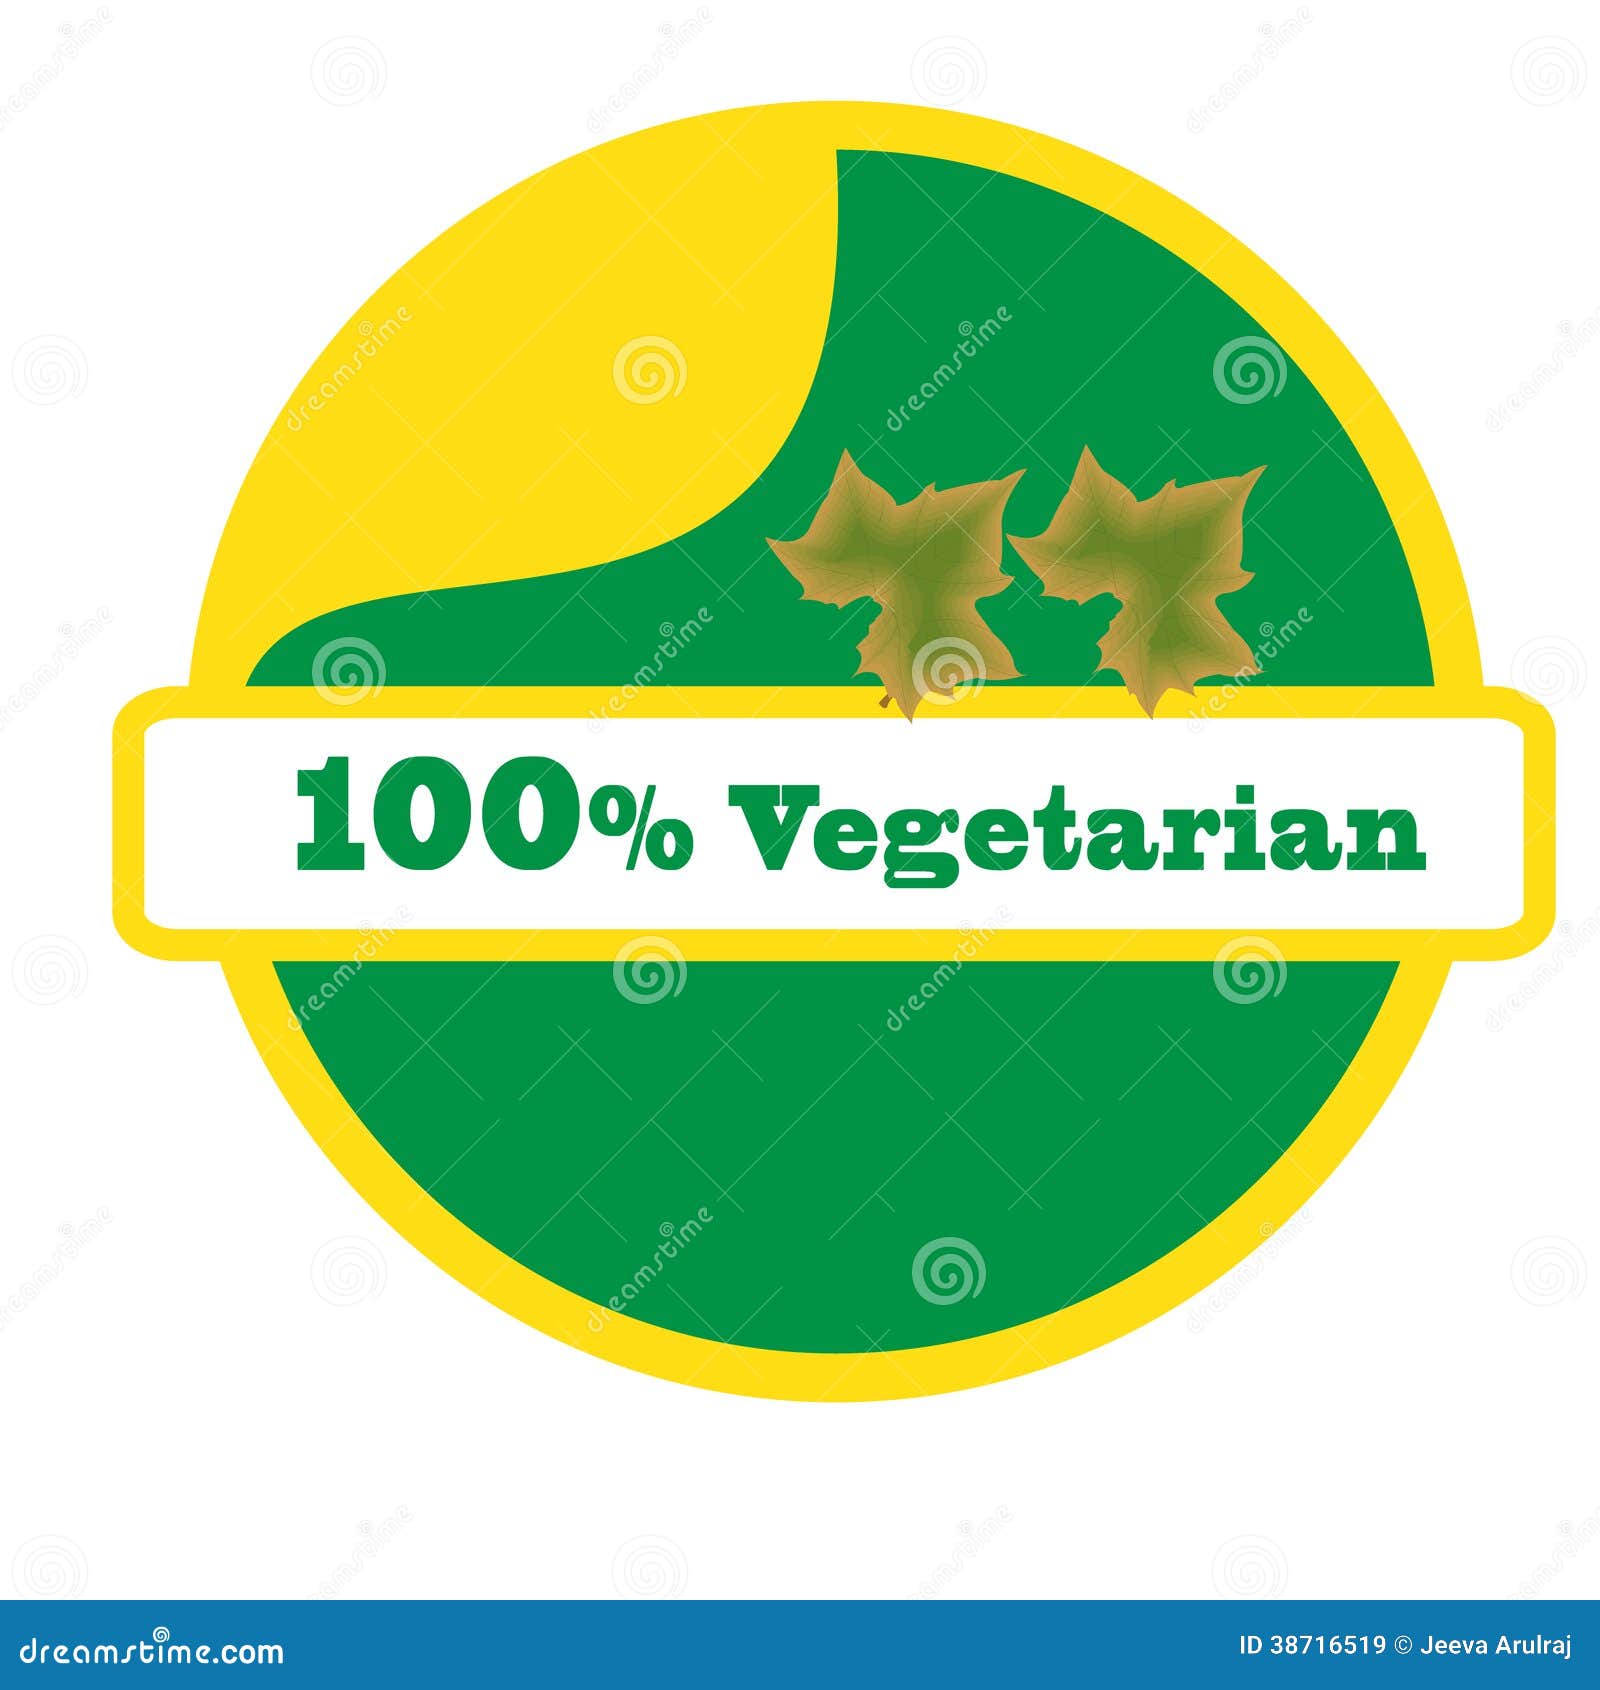 Vegetarian Logo PNG Vectors Free Download